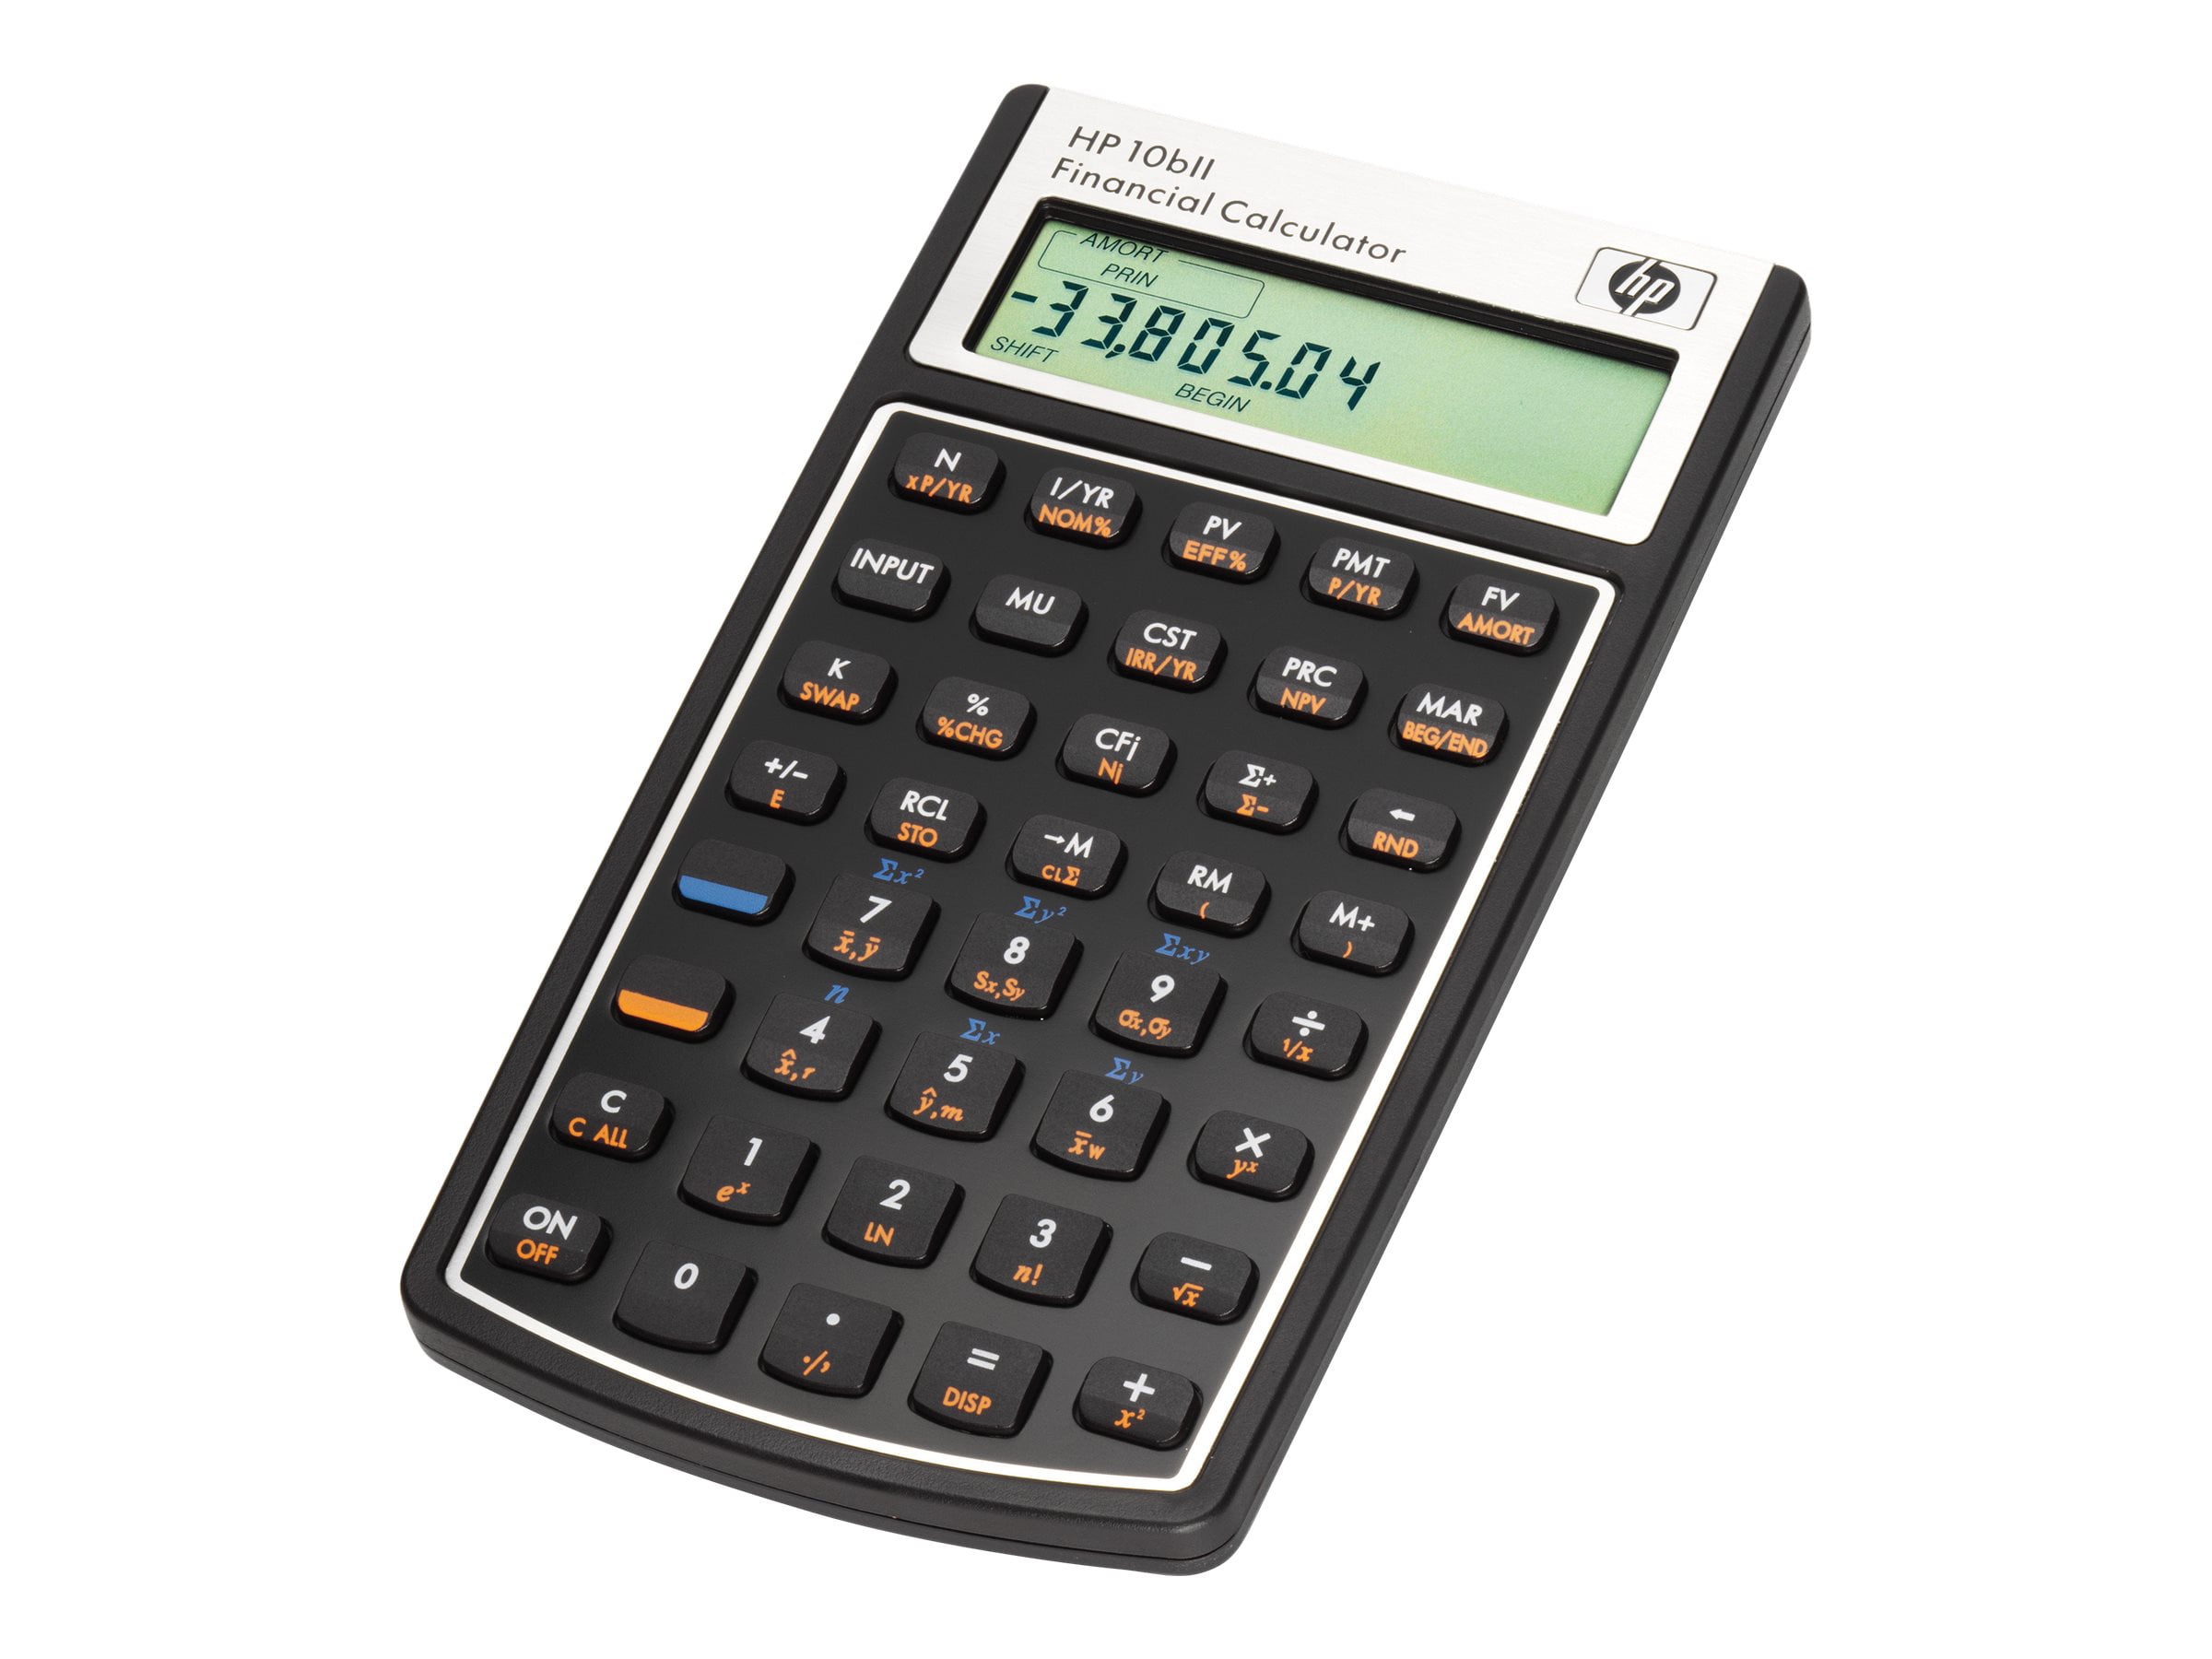 hp 10bii financial calculator cpt button